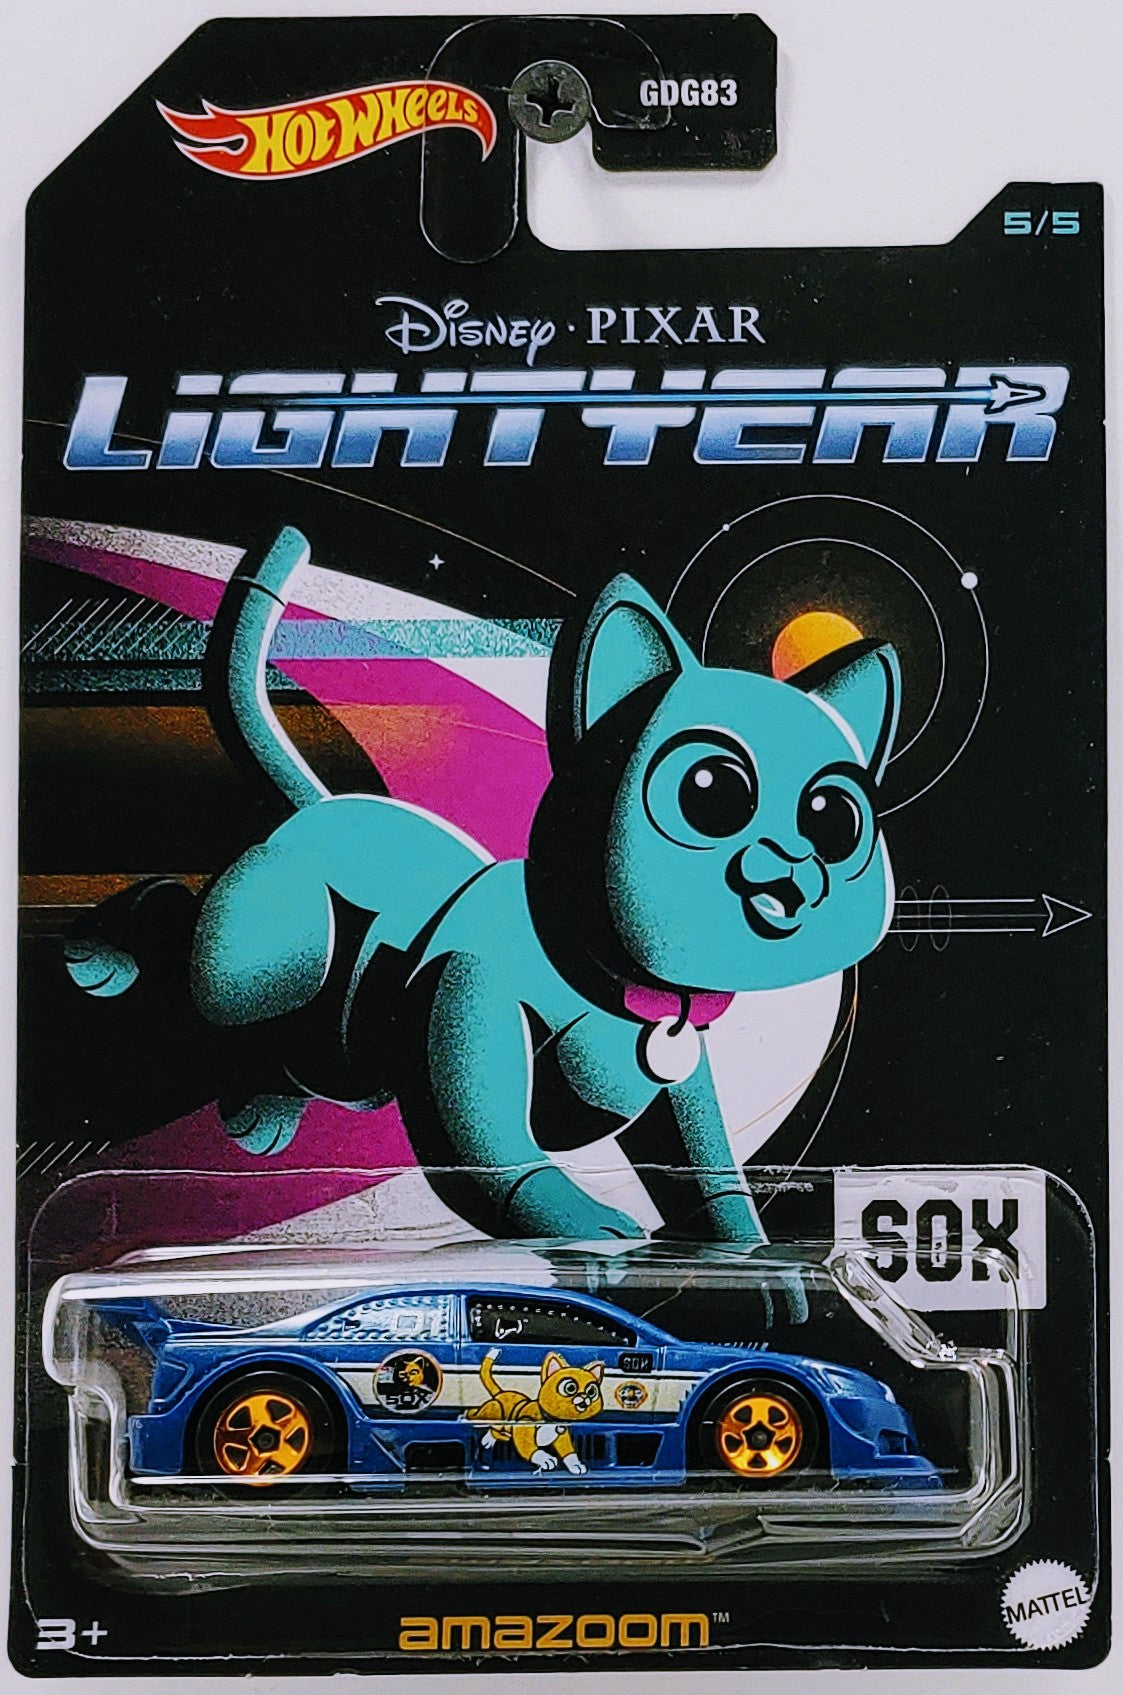 Hot Wheels 2022 - Disney / Pixar / Lightyear Series 5/5 - Amazoom - Blue / Sox - Walmart Exclusive